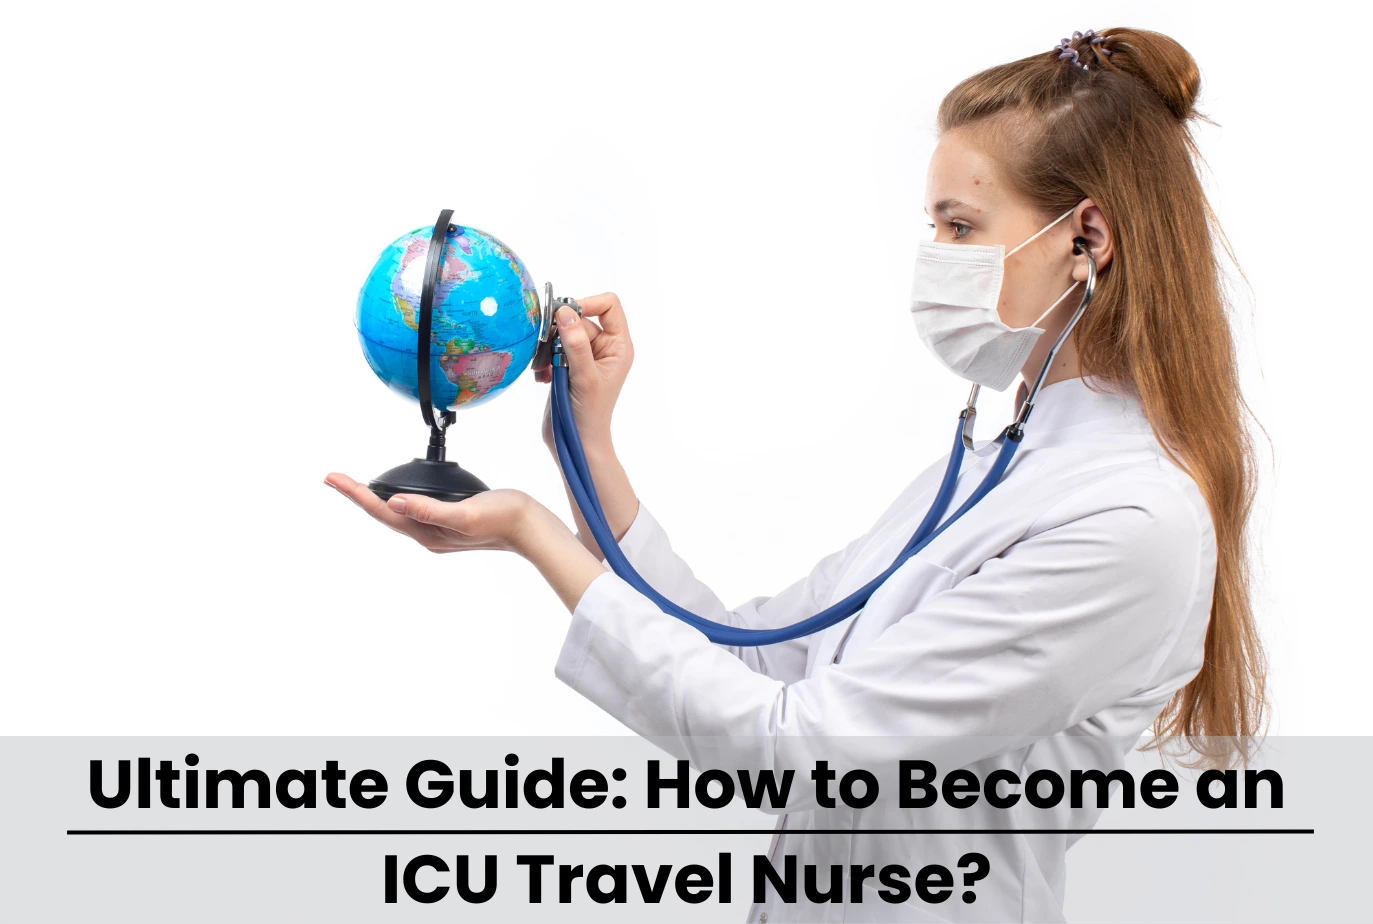 How to Become an ICU Travel Nurse